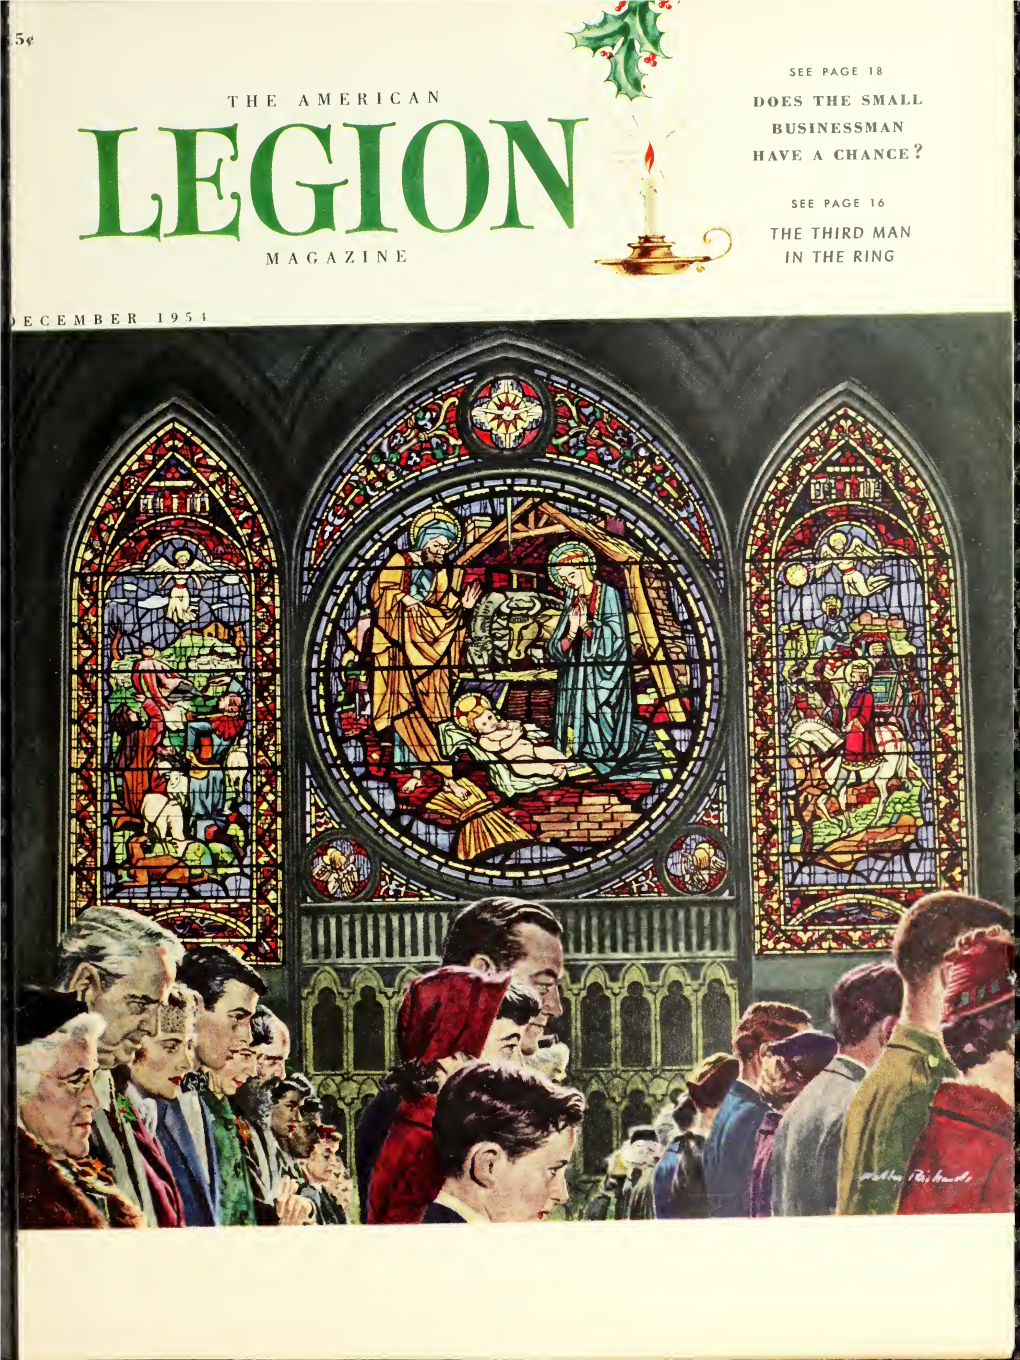 The American Legion Magazine ^^"^